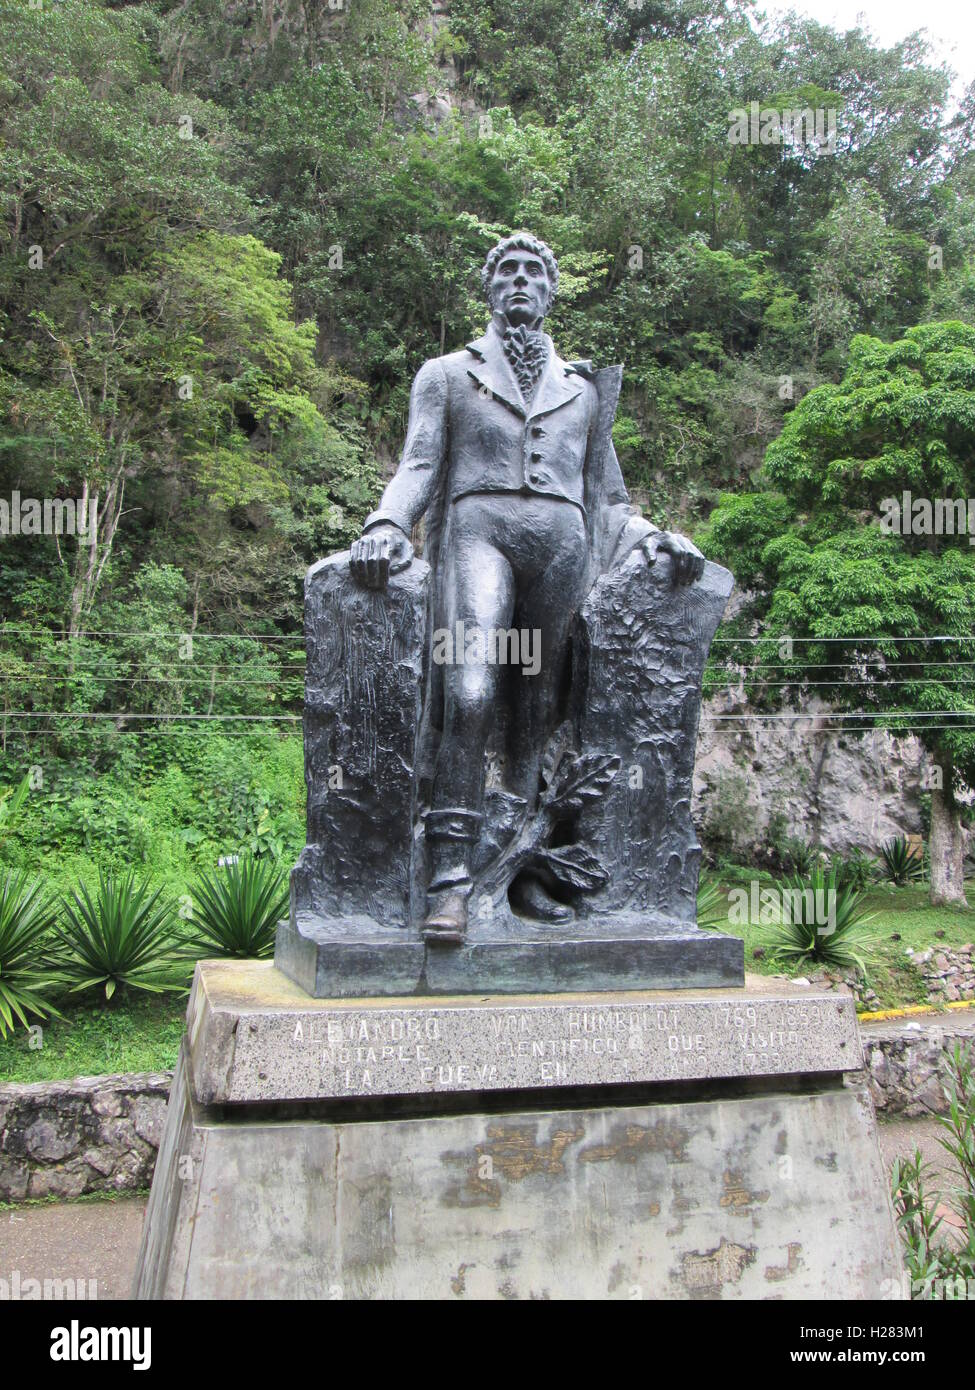 Alexander Von Humboldt Monument, Venezuela. Stock Photo